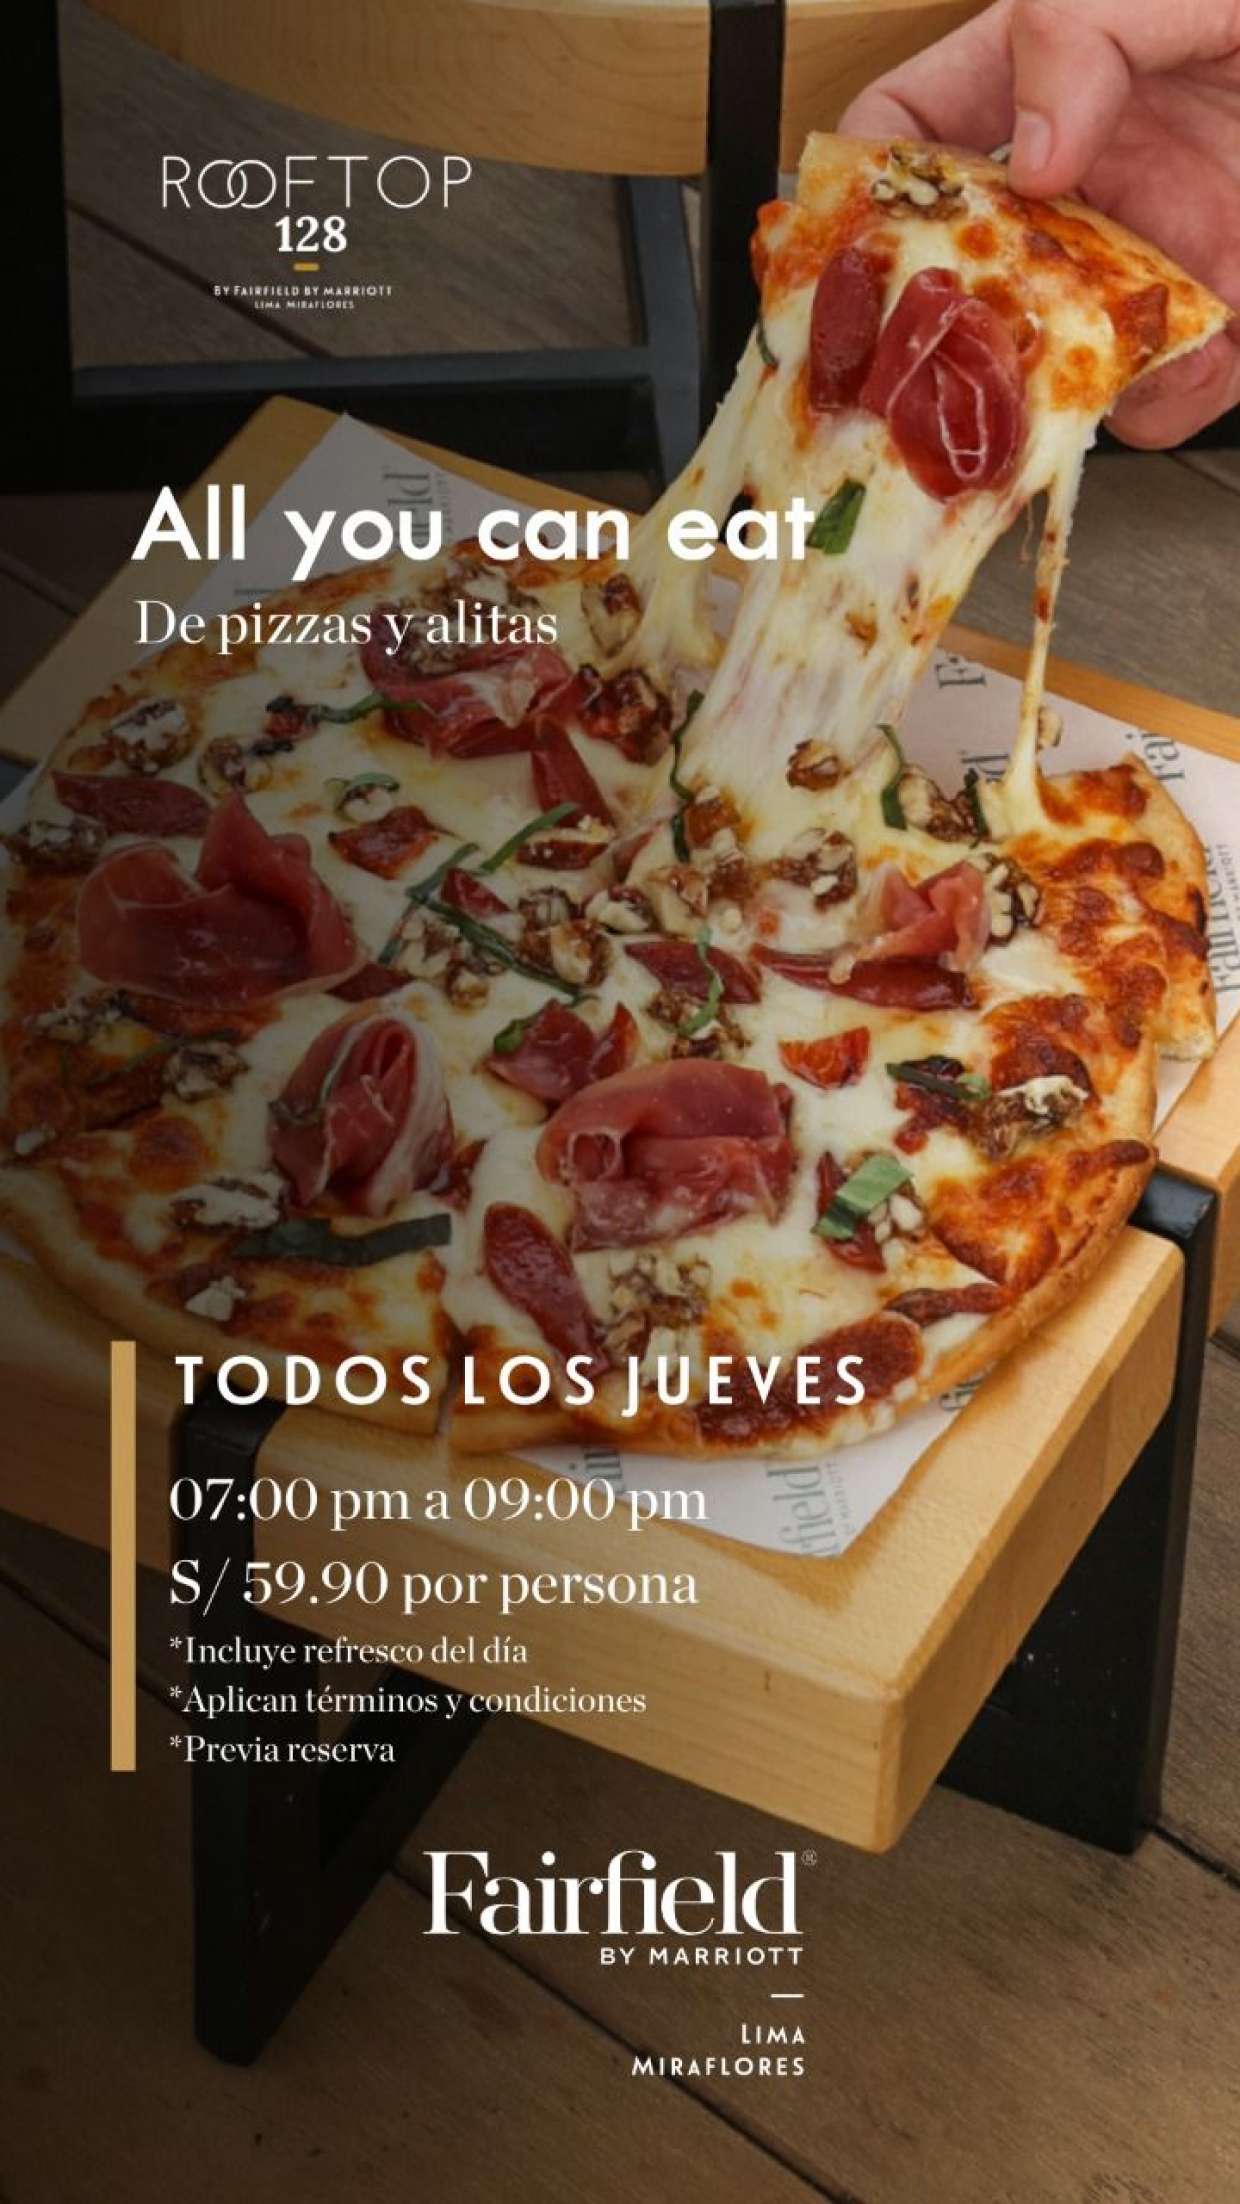 All you can eat de pizzas y alitas